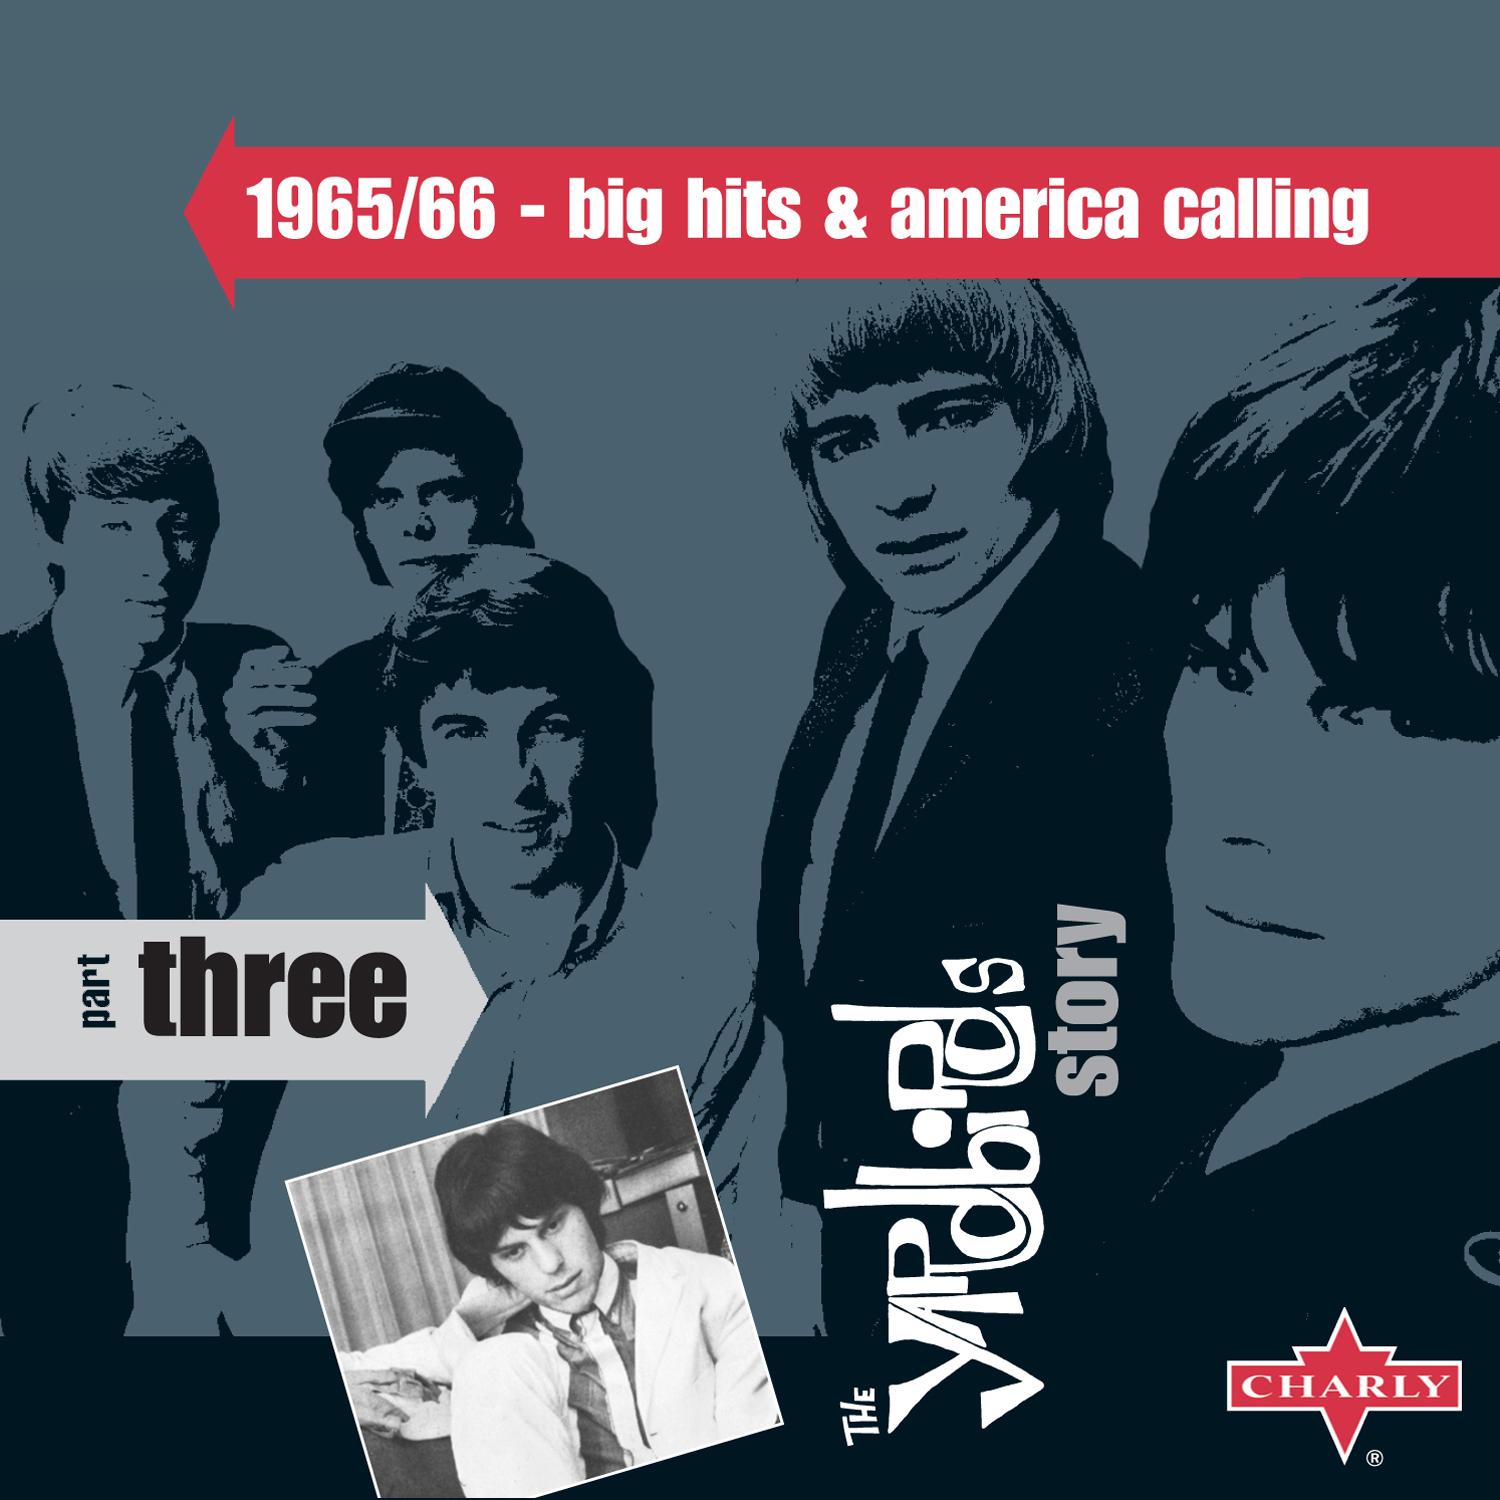 The Yardbirds Story - Pt. 3 - 1965/66 - Big Hits & America Calling